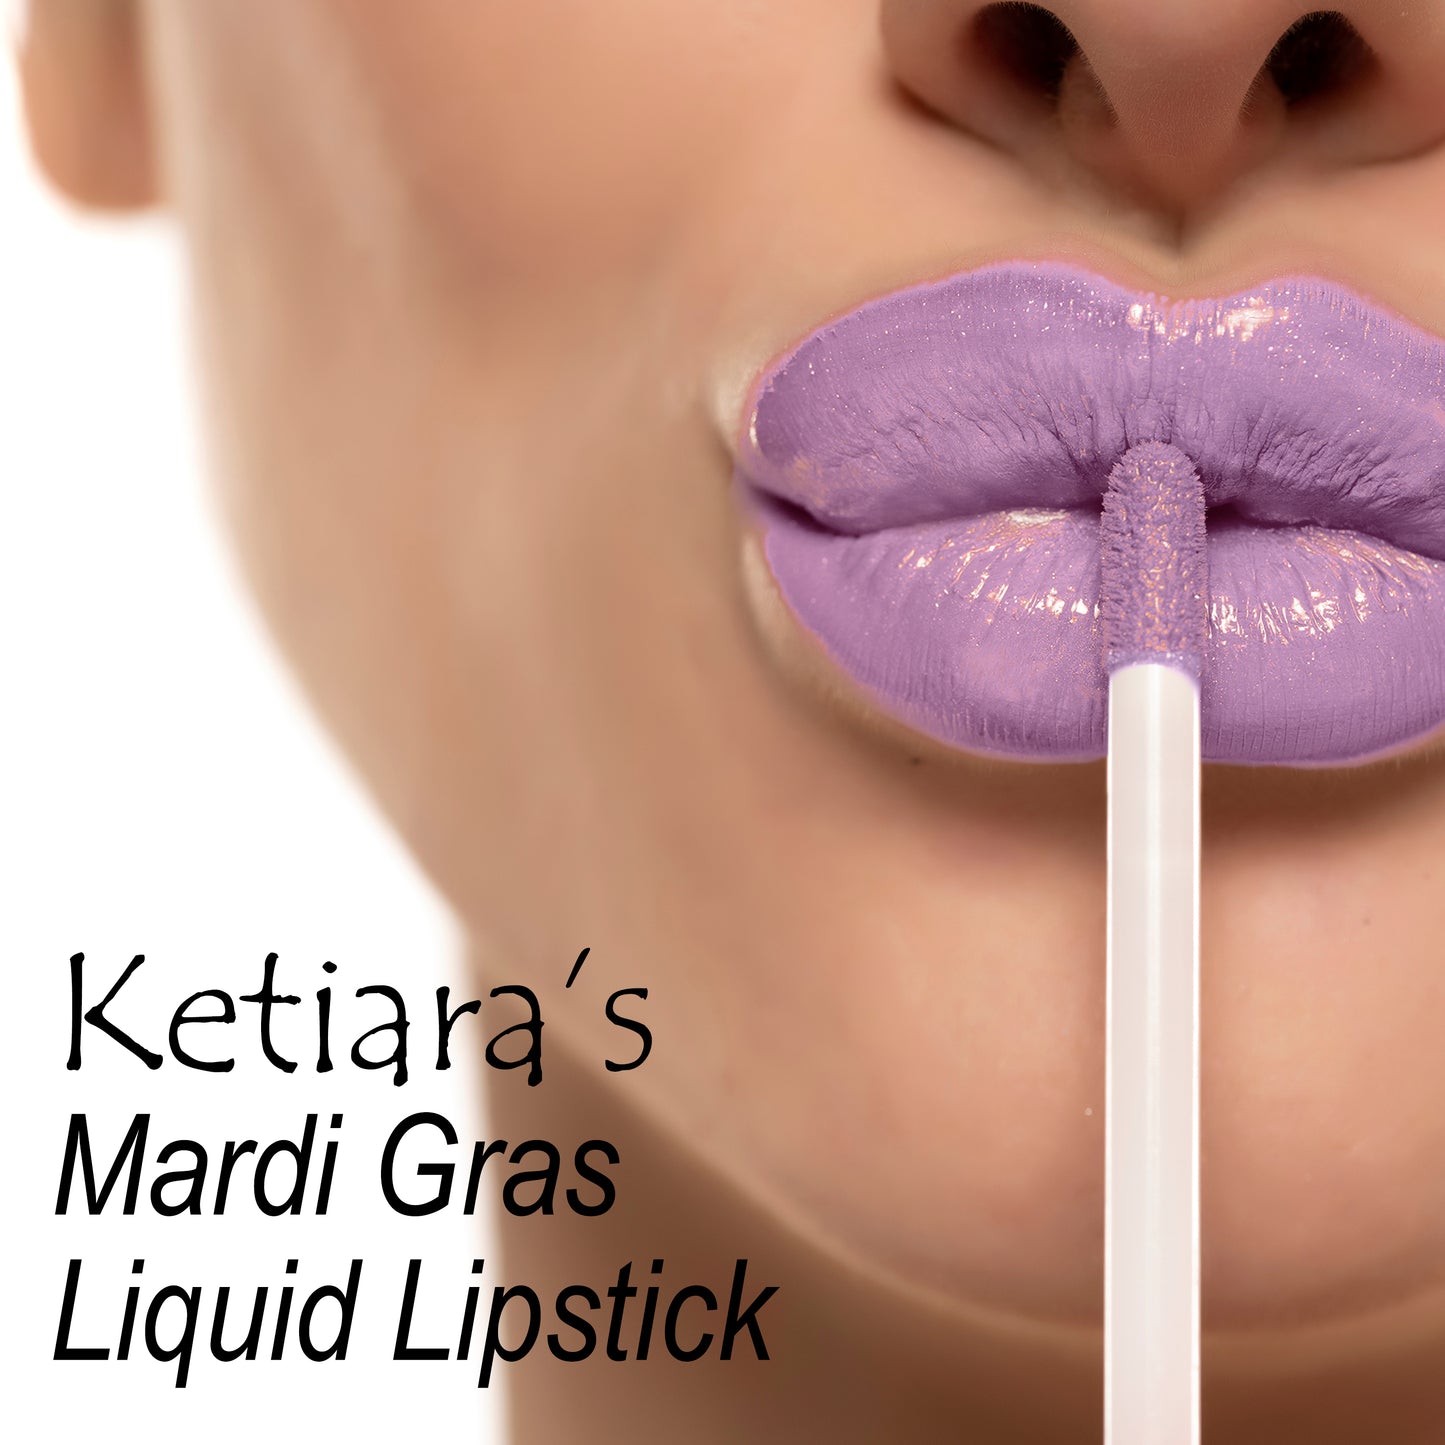 Ketiara Premium Full Coverage Mardi Gras Liquid Lipstick Infused With Hyaluronic Acid, 10 ml